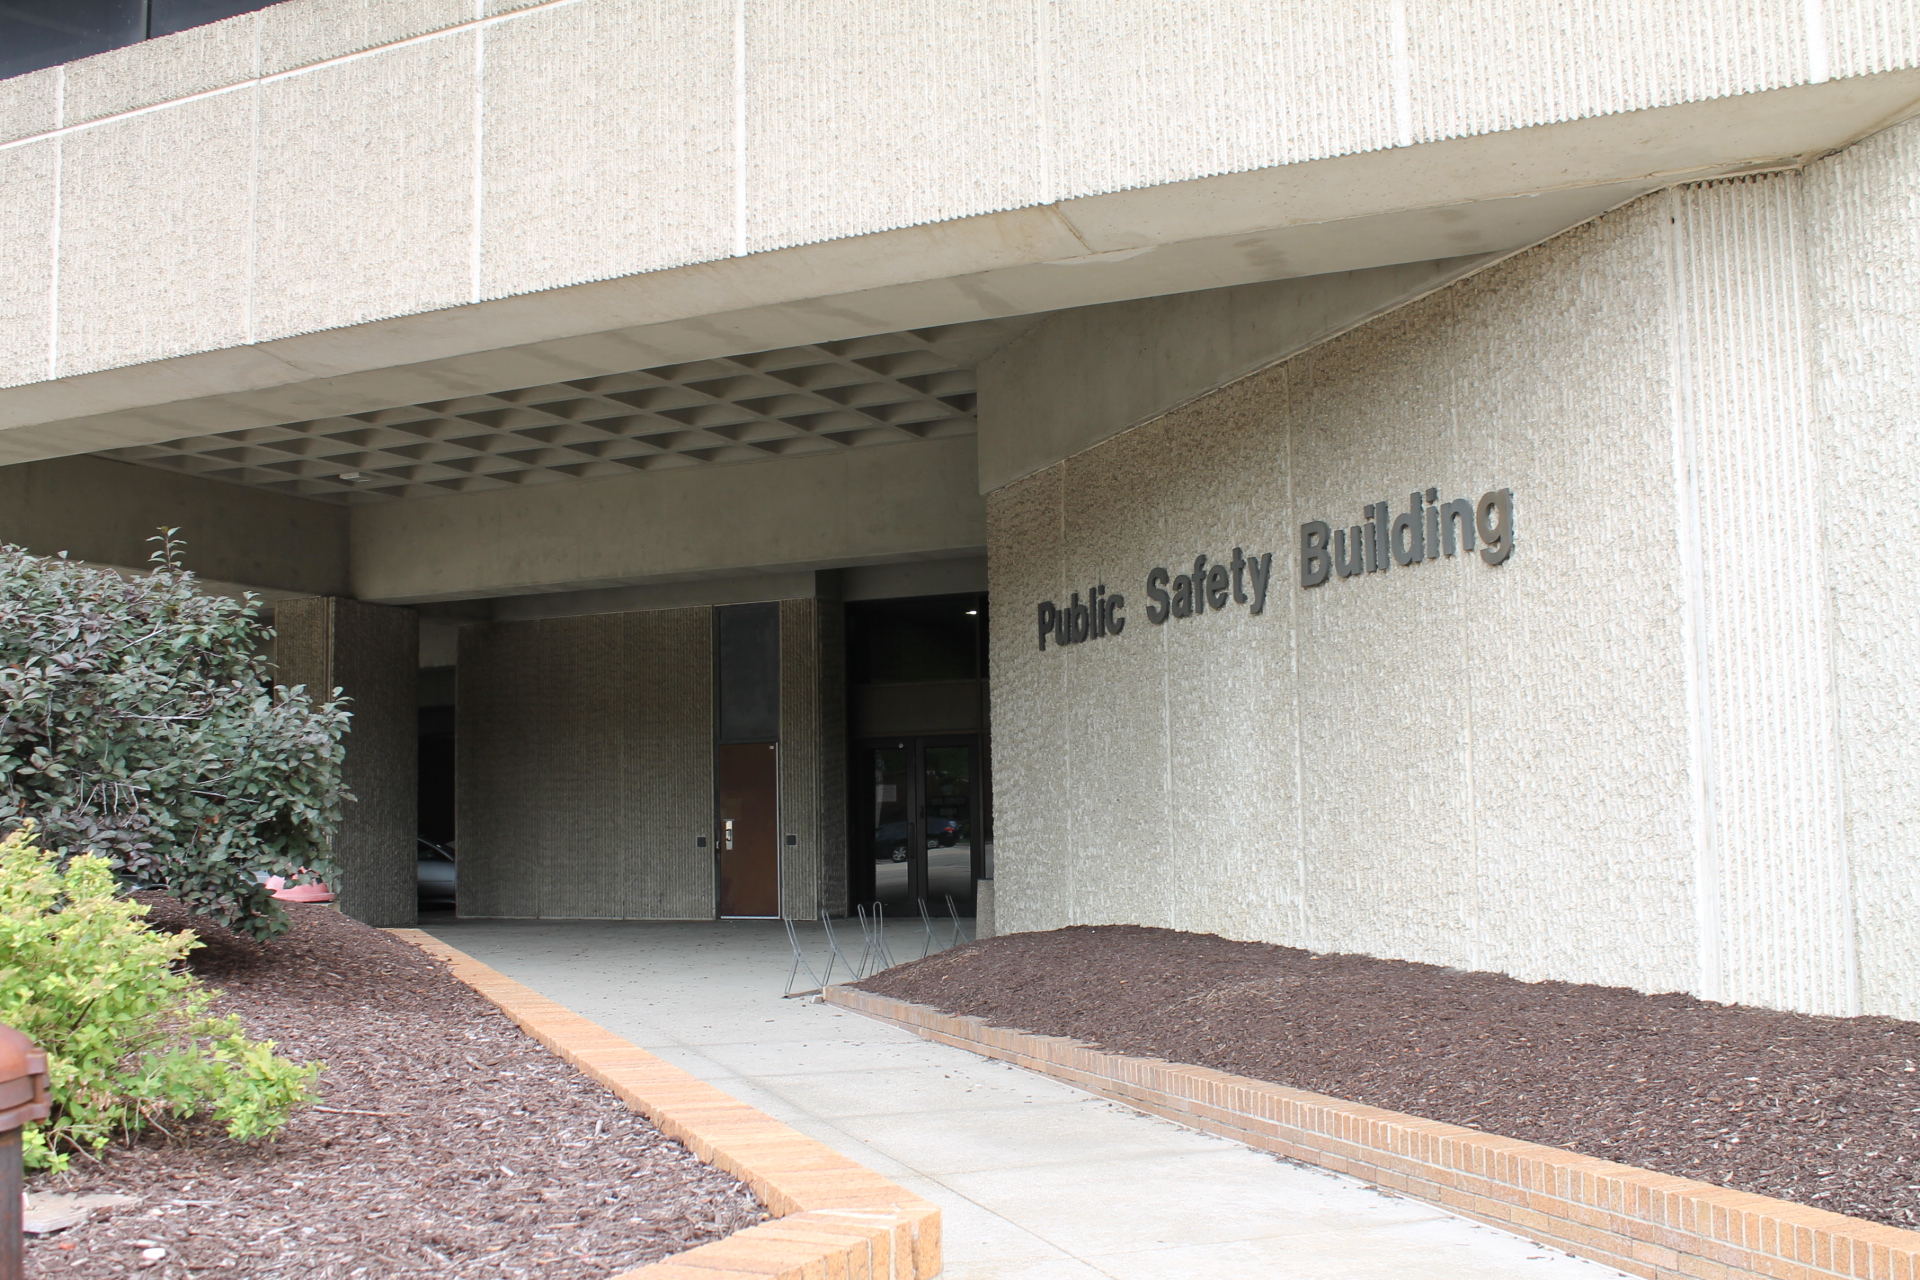 Public Safety Building